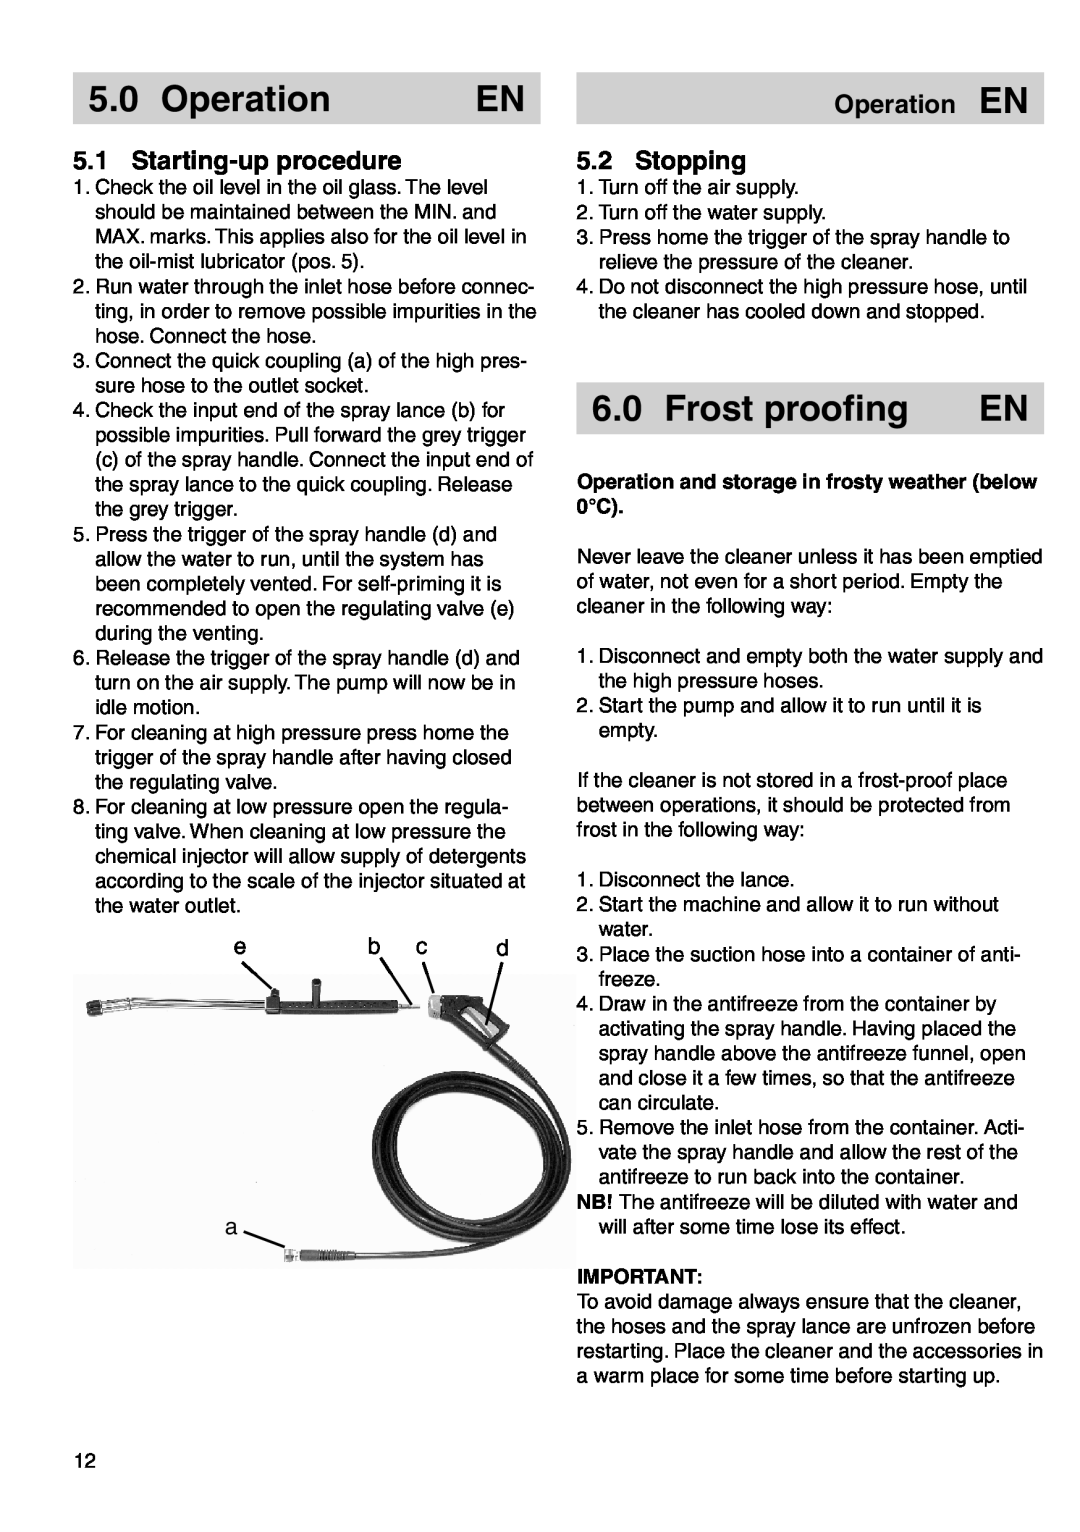 Nilfisk-ALTO 03KLU user manual Frost prooﬁng EN, Starting-up procedure, Operation EN 5.2 Stopping 